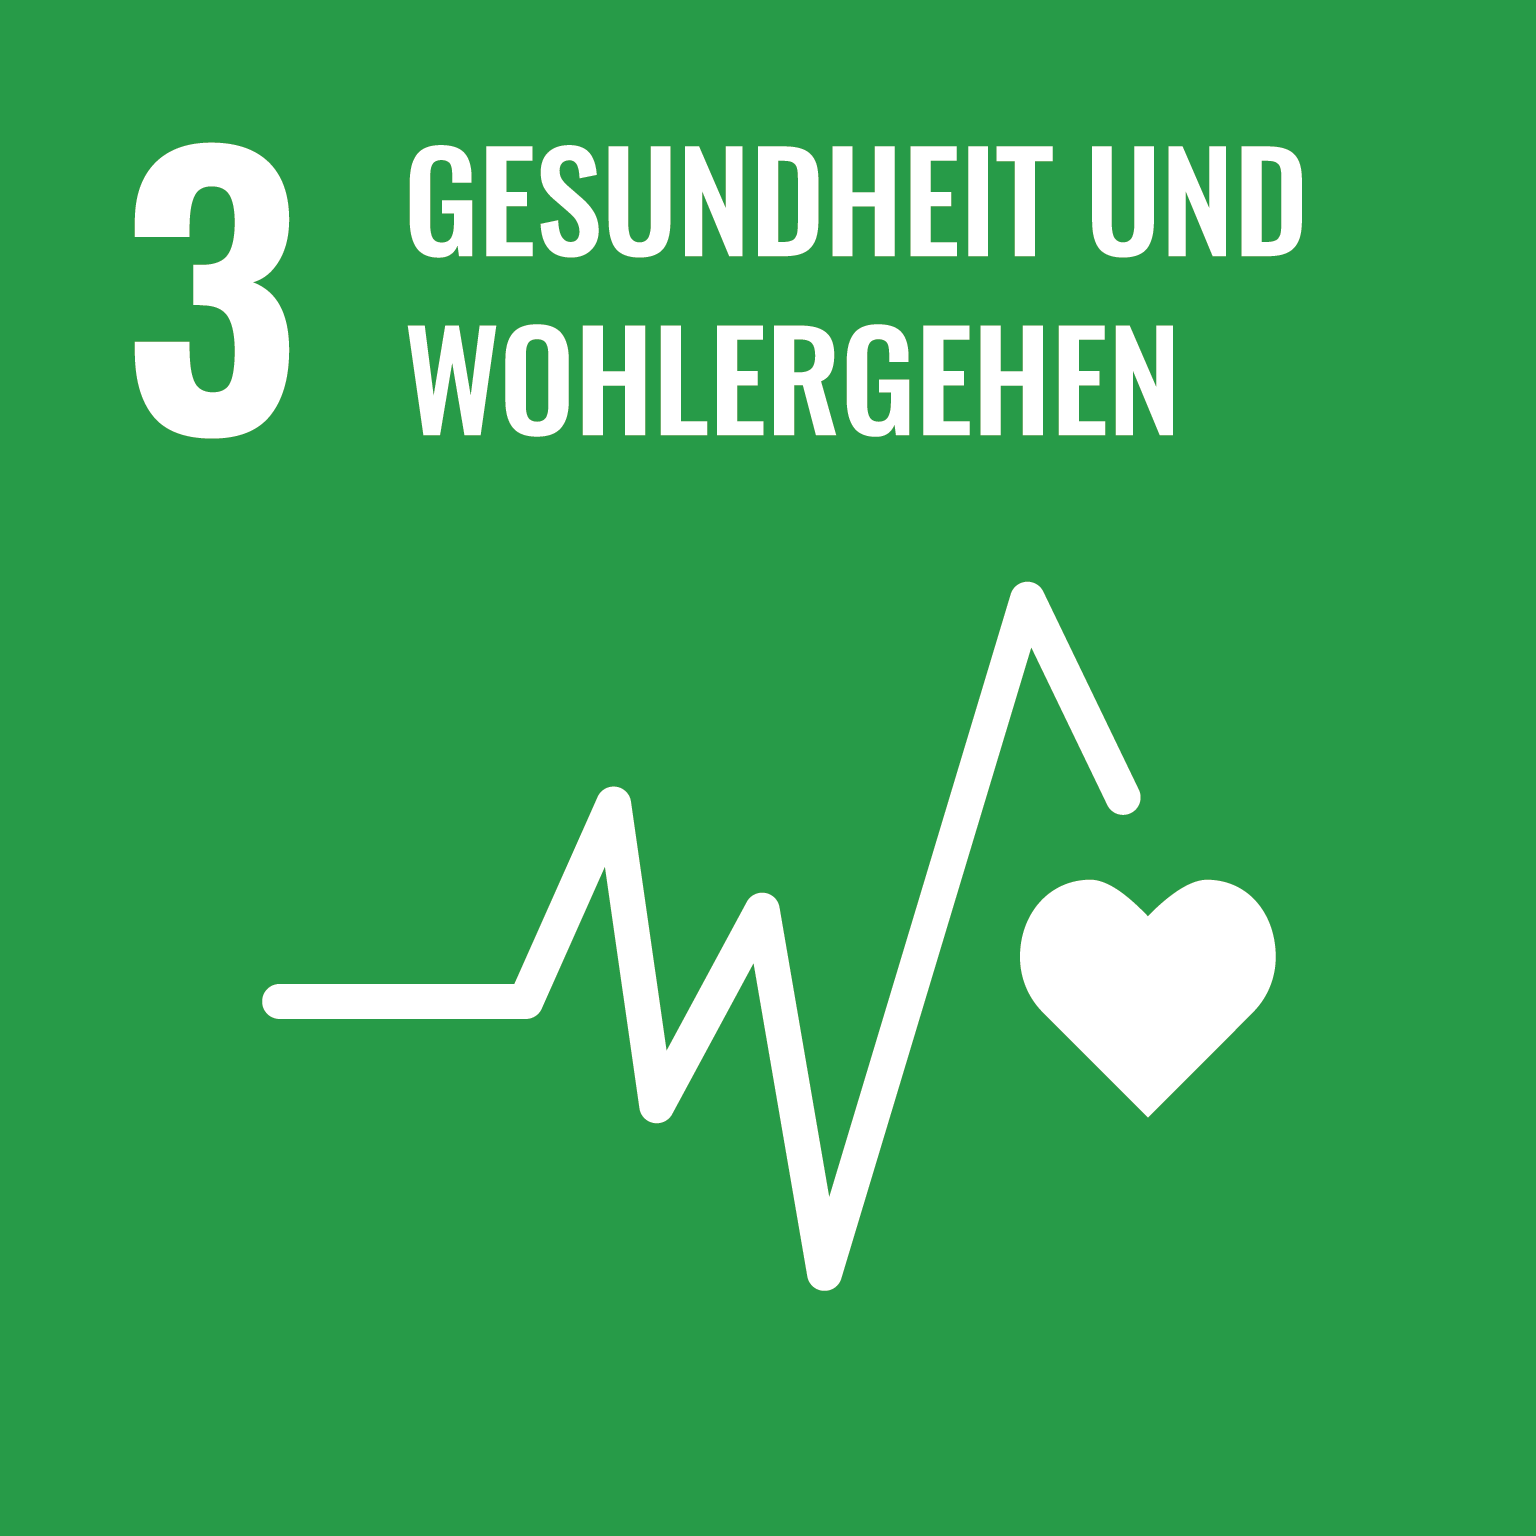 social development goal 3: Gesundheit